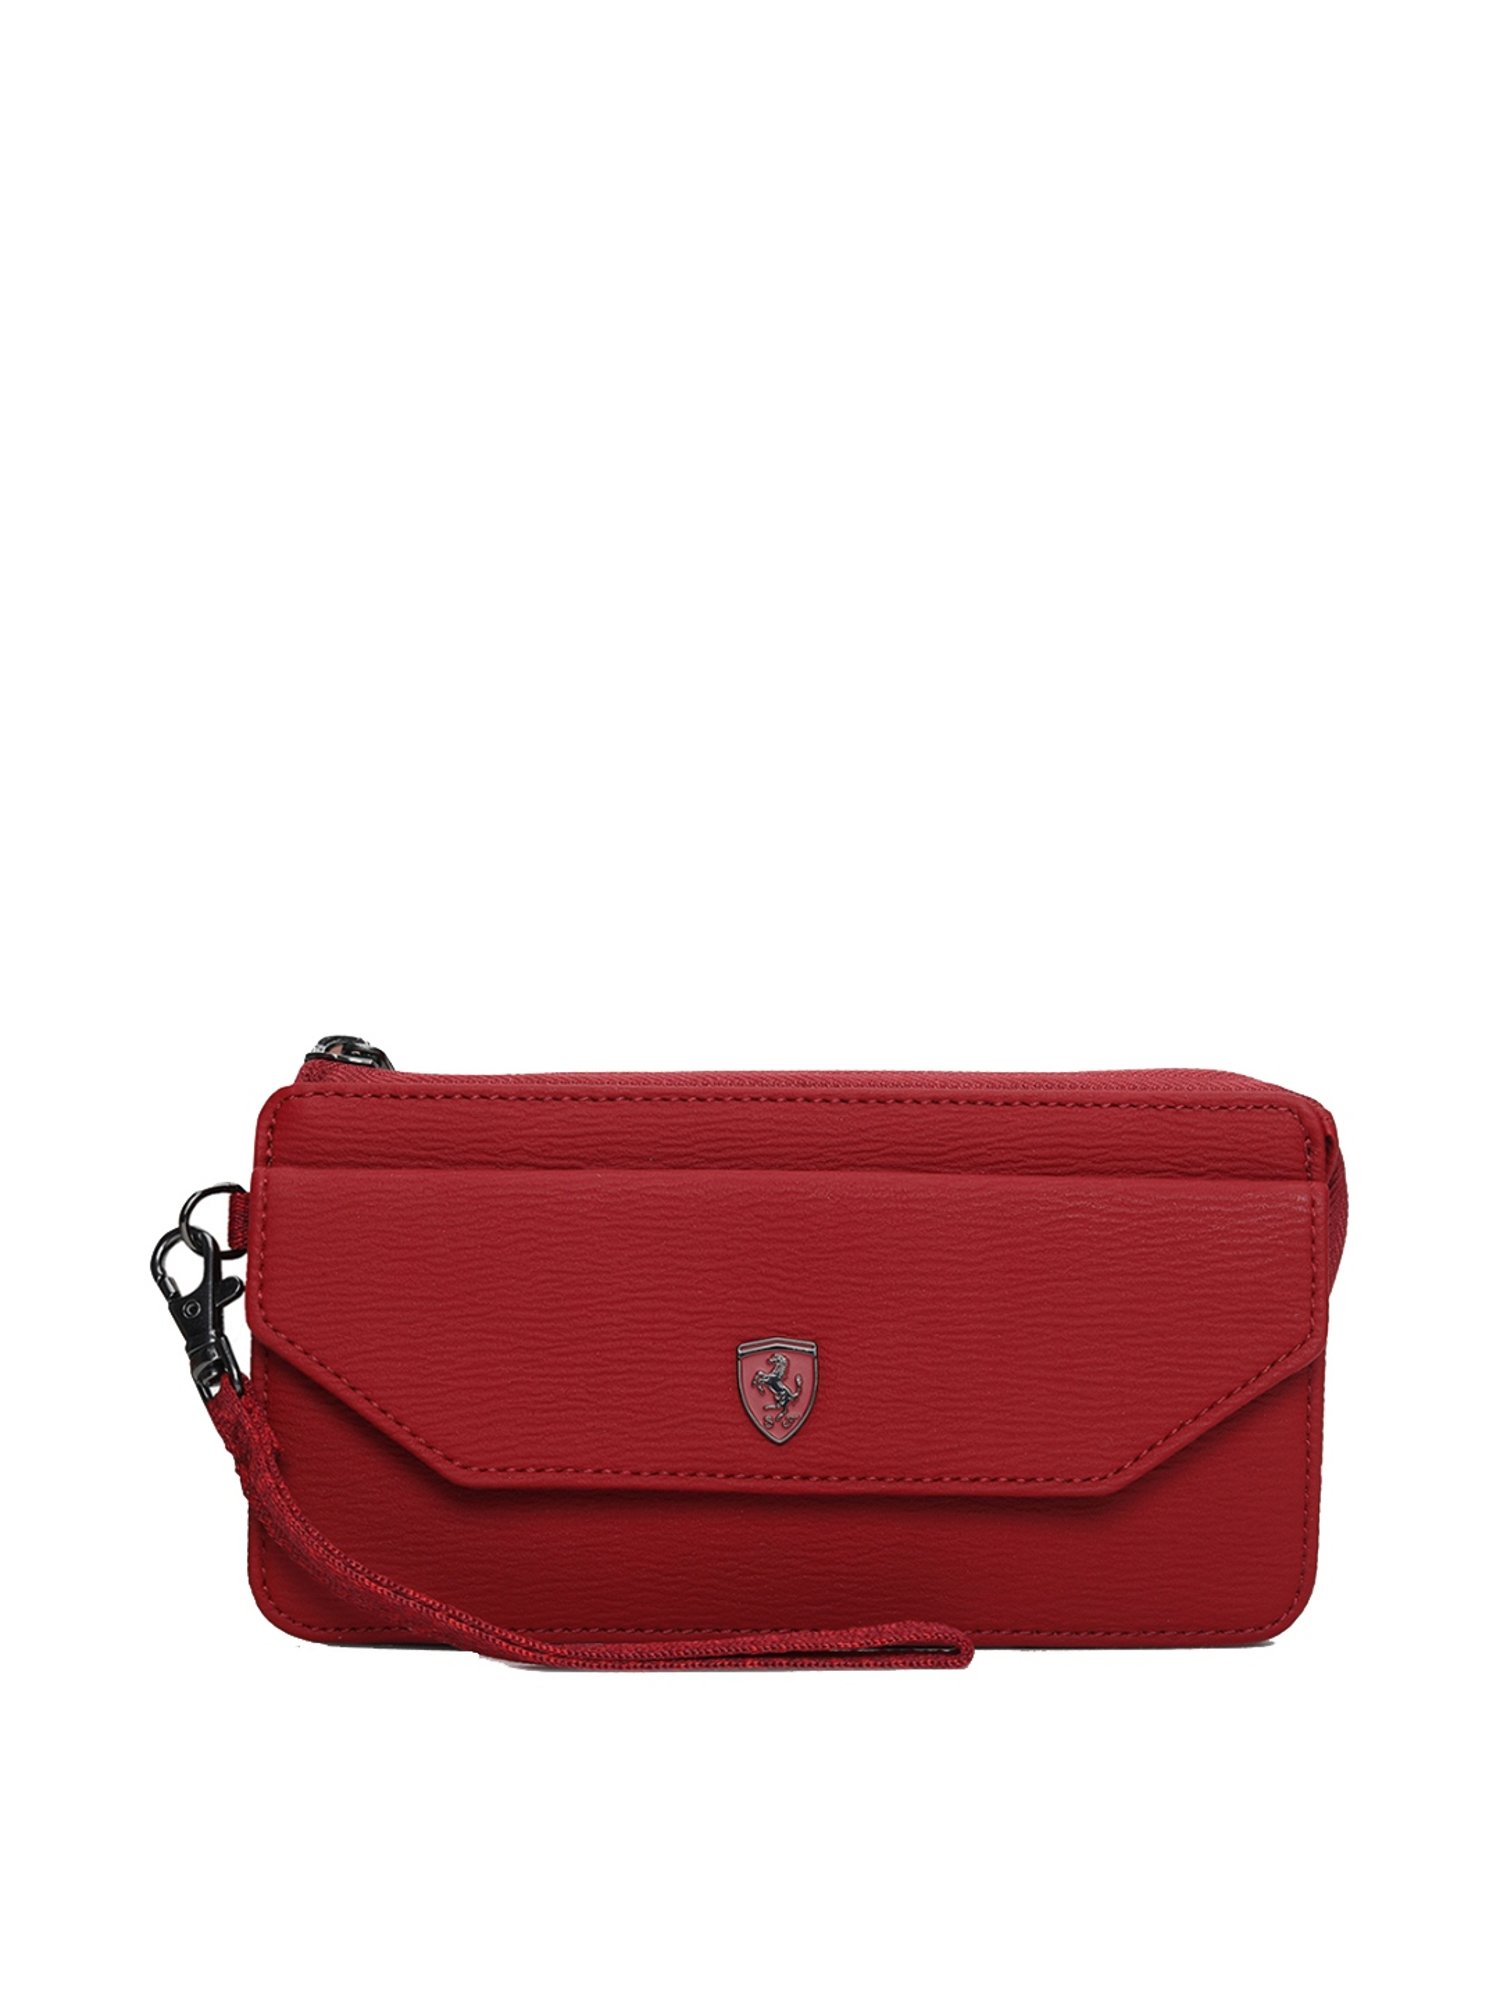 Puma Ferrari Handbag | eBay